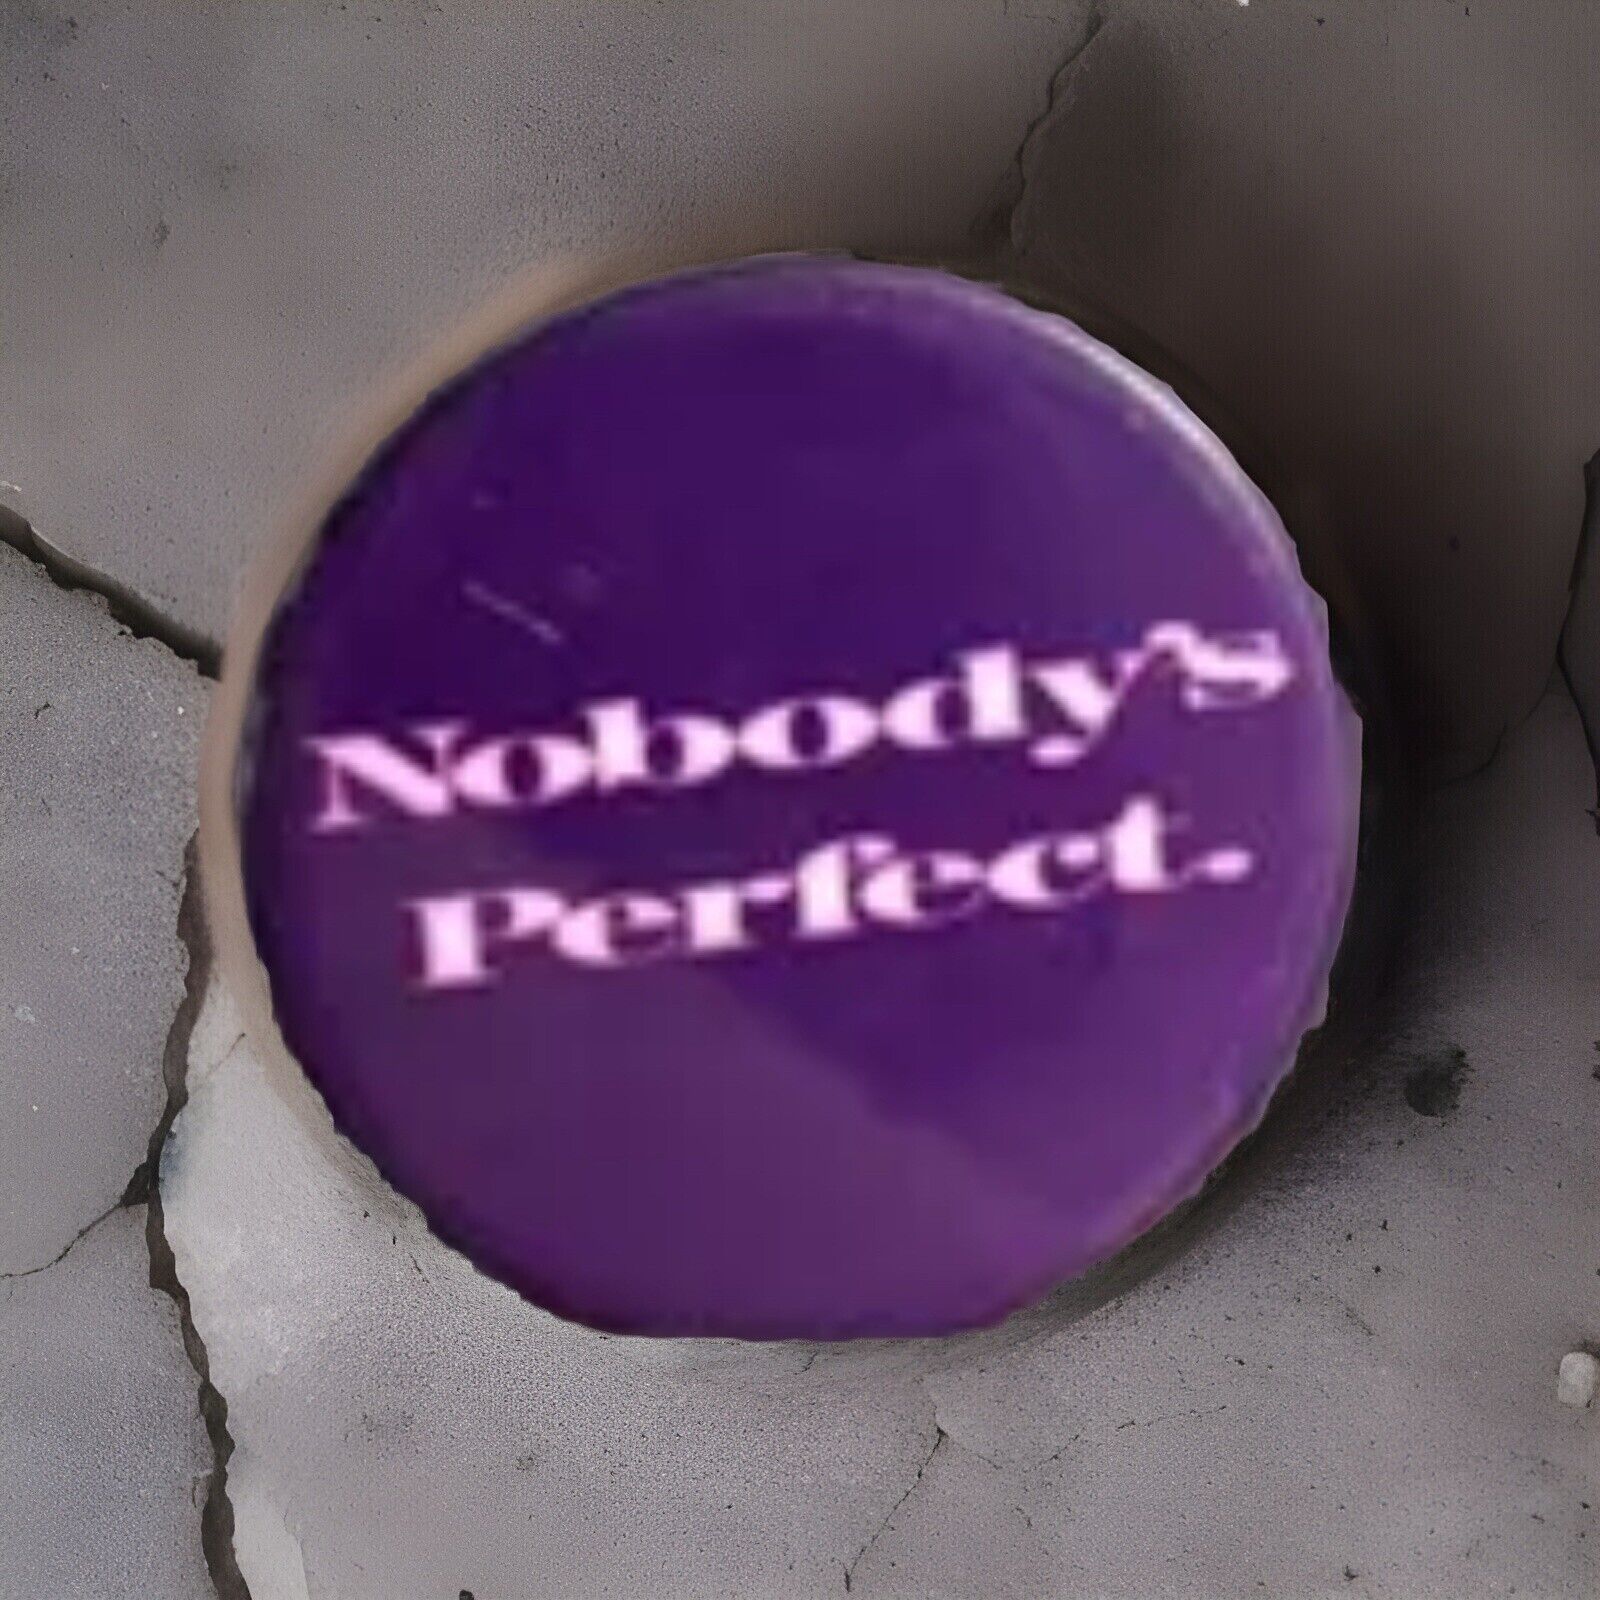 DEEP PURPLE ‘NOBODY’S PERFECT’ 1988 Pin